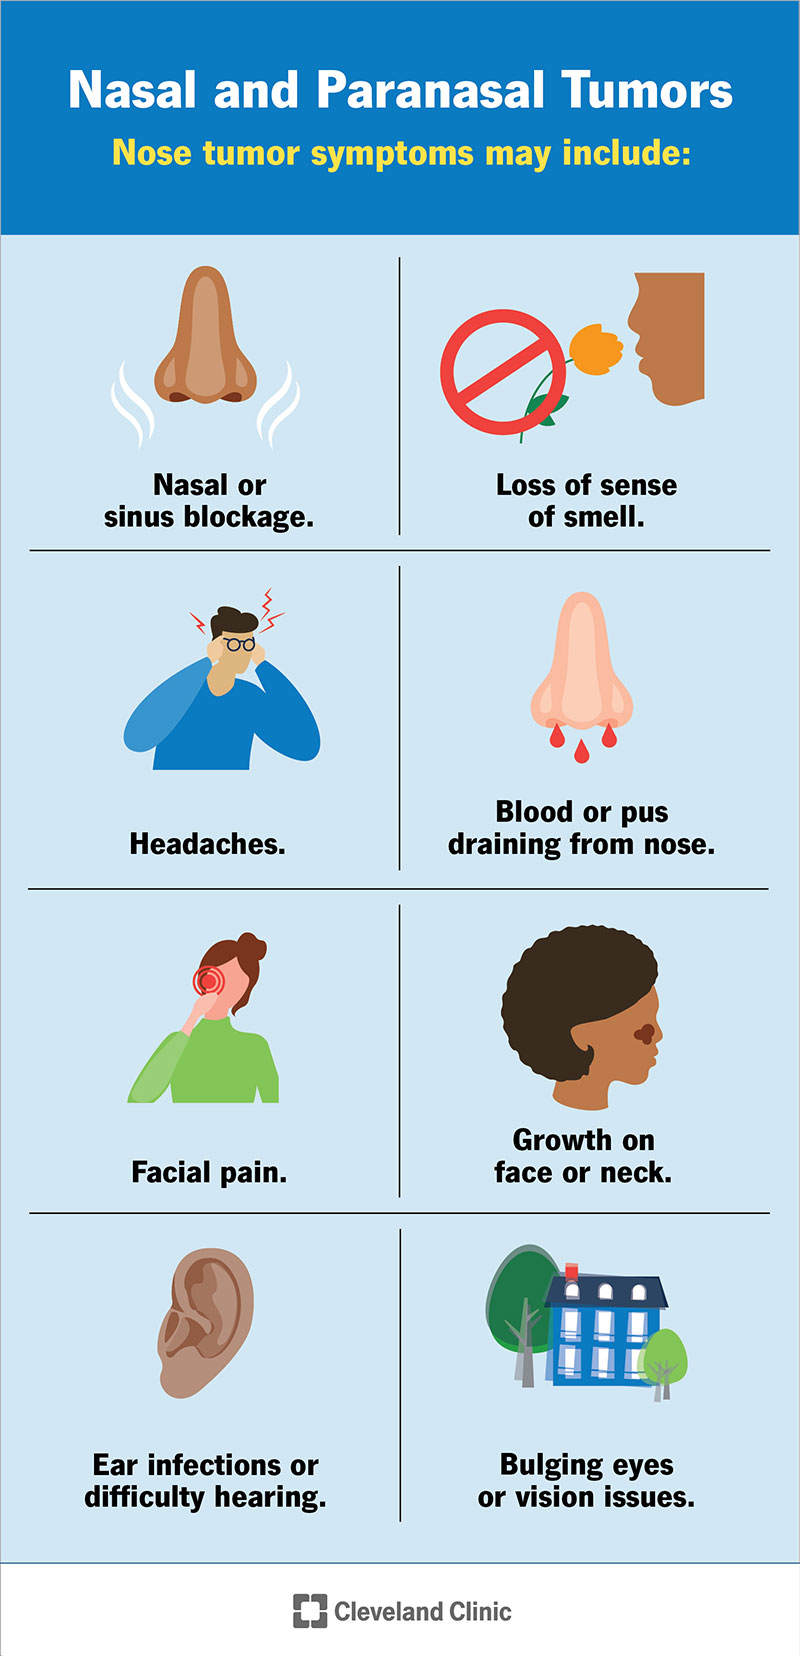 Nasal and paranasal symptoms include headaches, facial pain and loss of sense of smell.